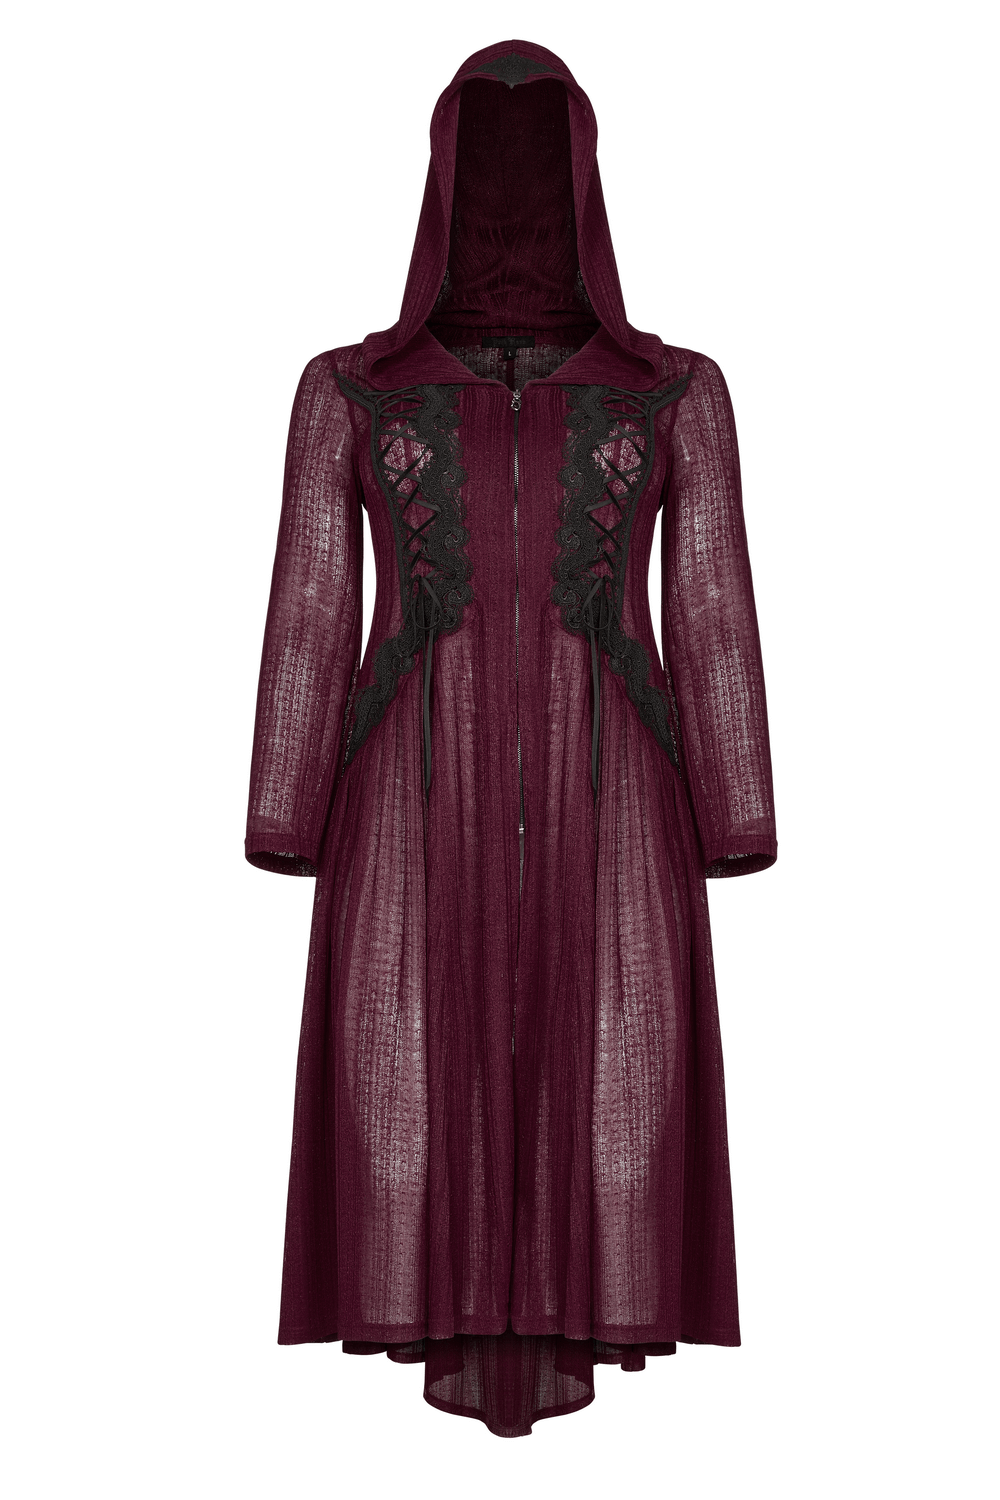 Light Gothic Women's Coat with Hood on Zipper - HARD'N'HEAVY